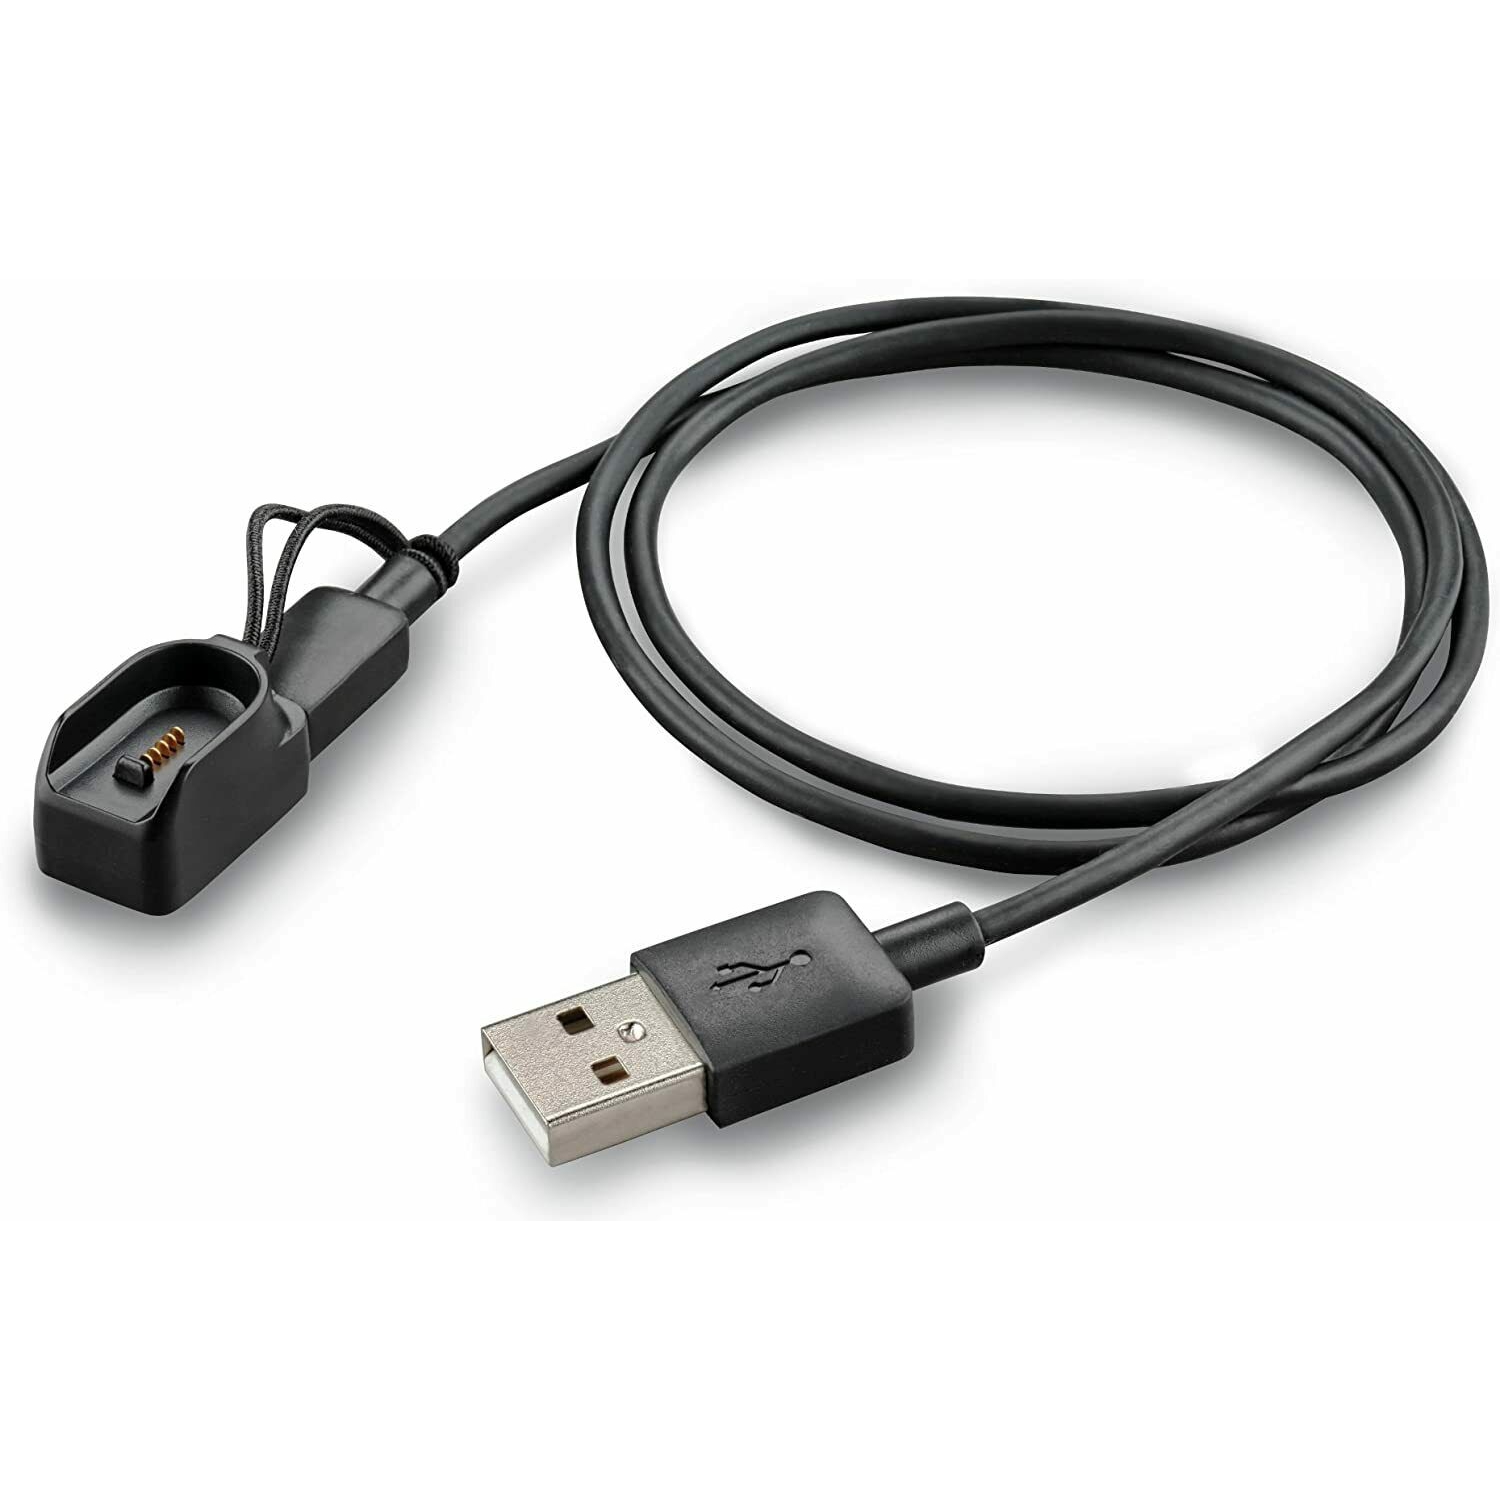 Refurbished (Good) Plantronics Voyager Legend UC B235-M USB PC